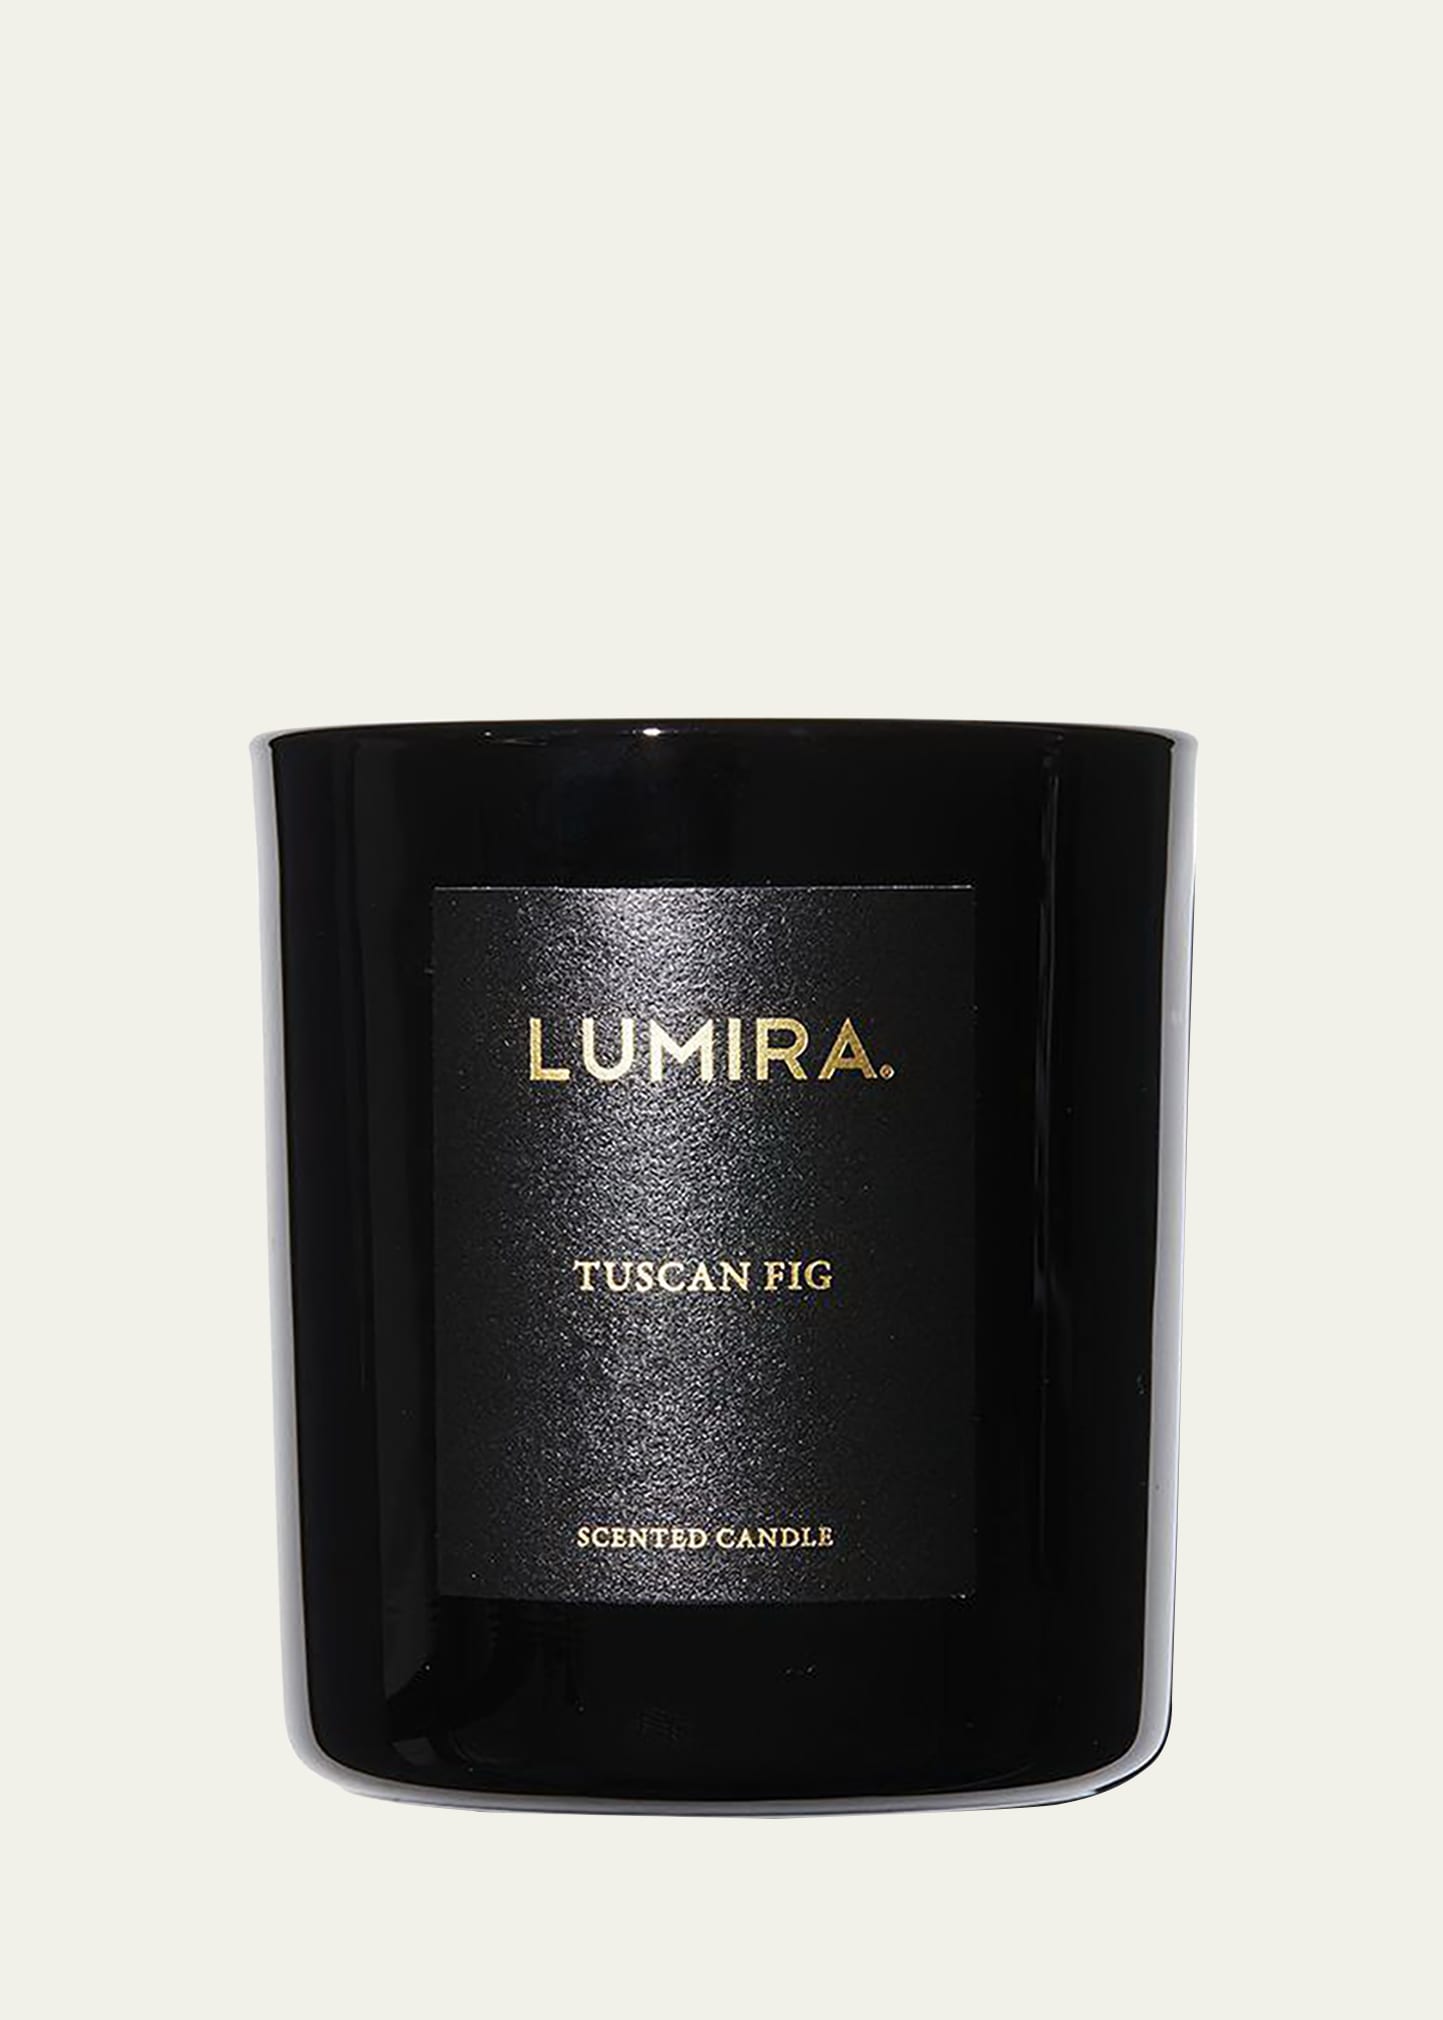 Lumira Tuscan Fig Candle, 10.5 Oz.